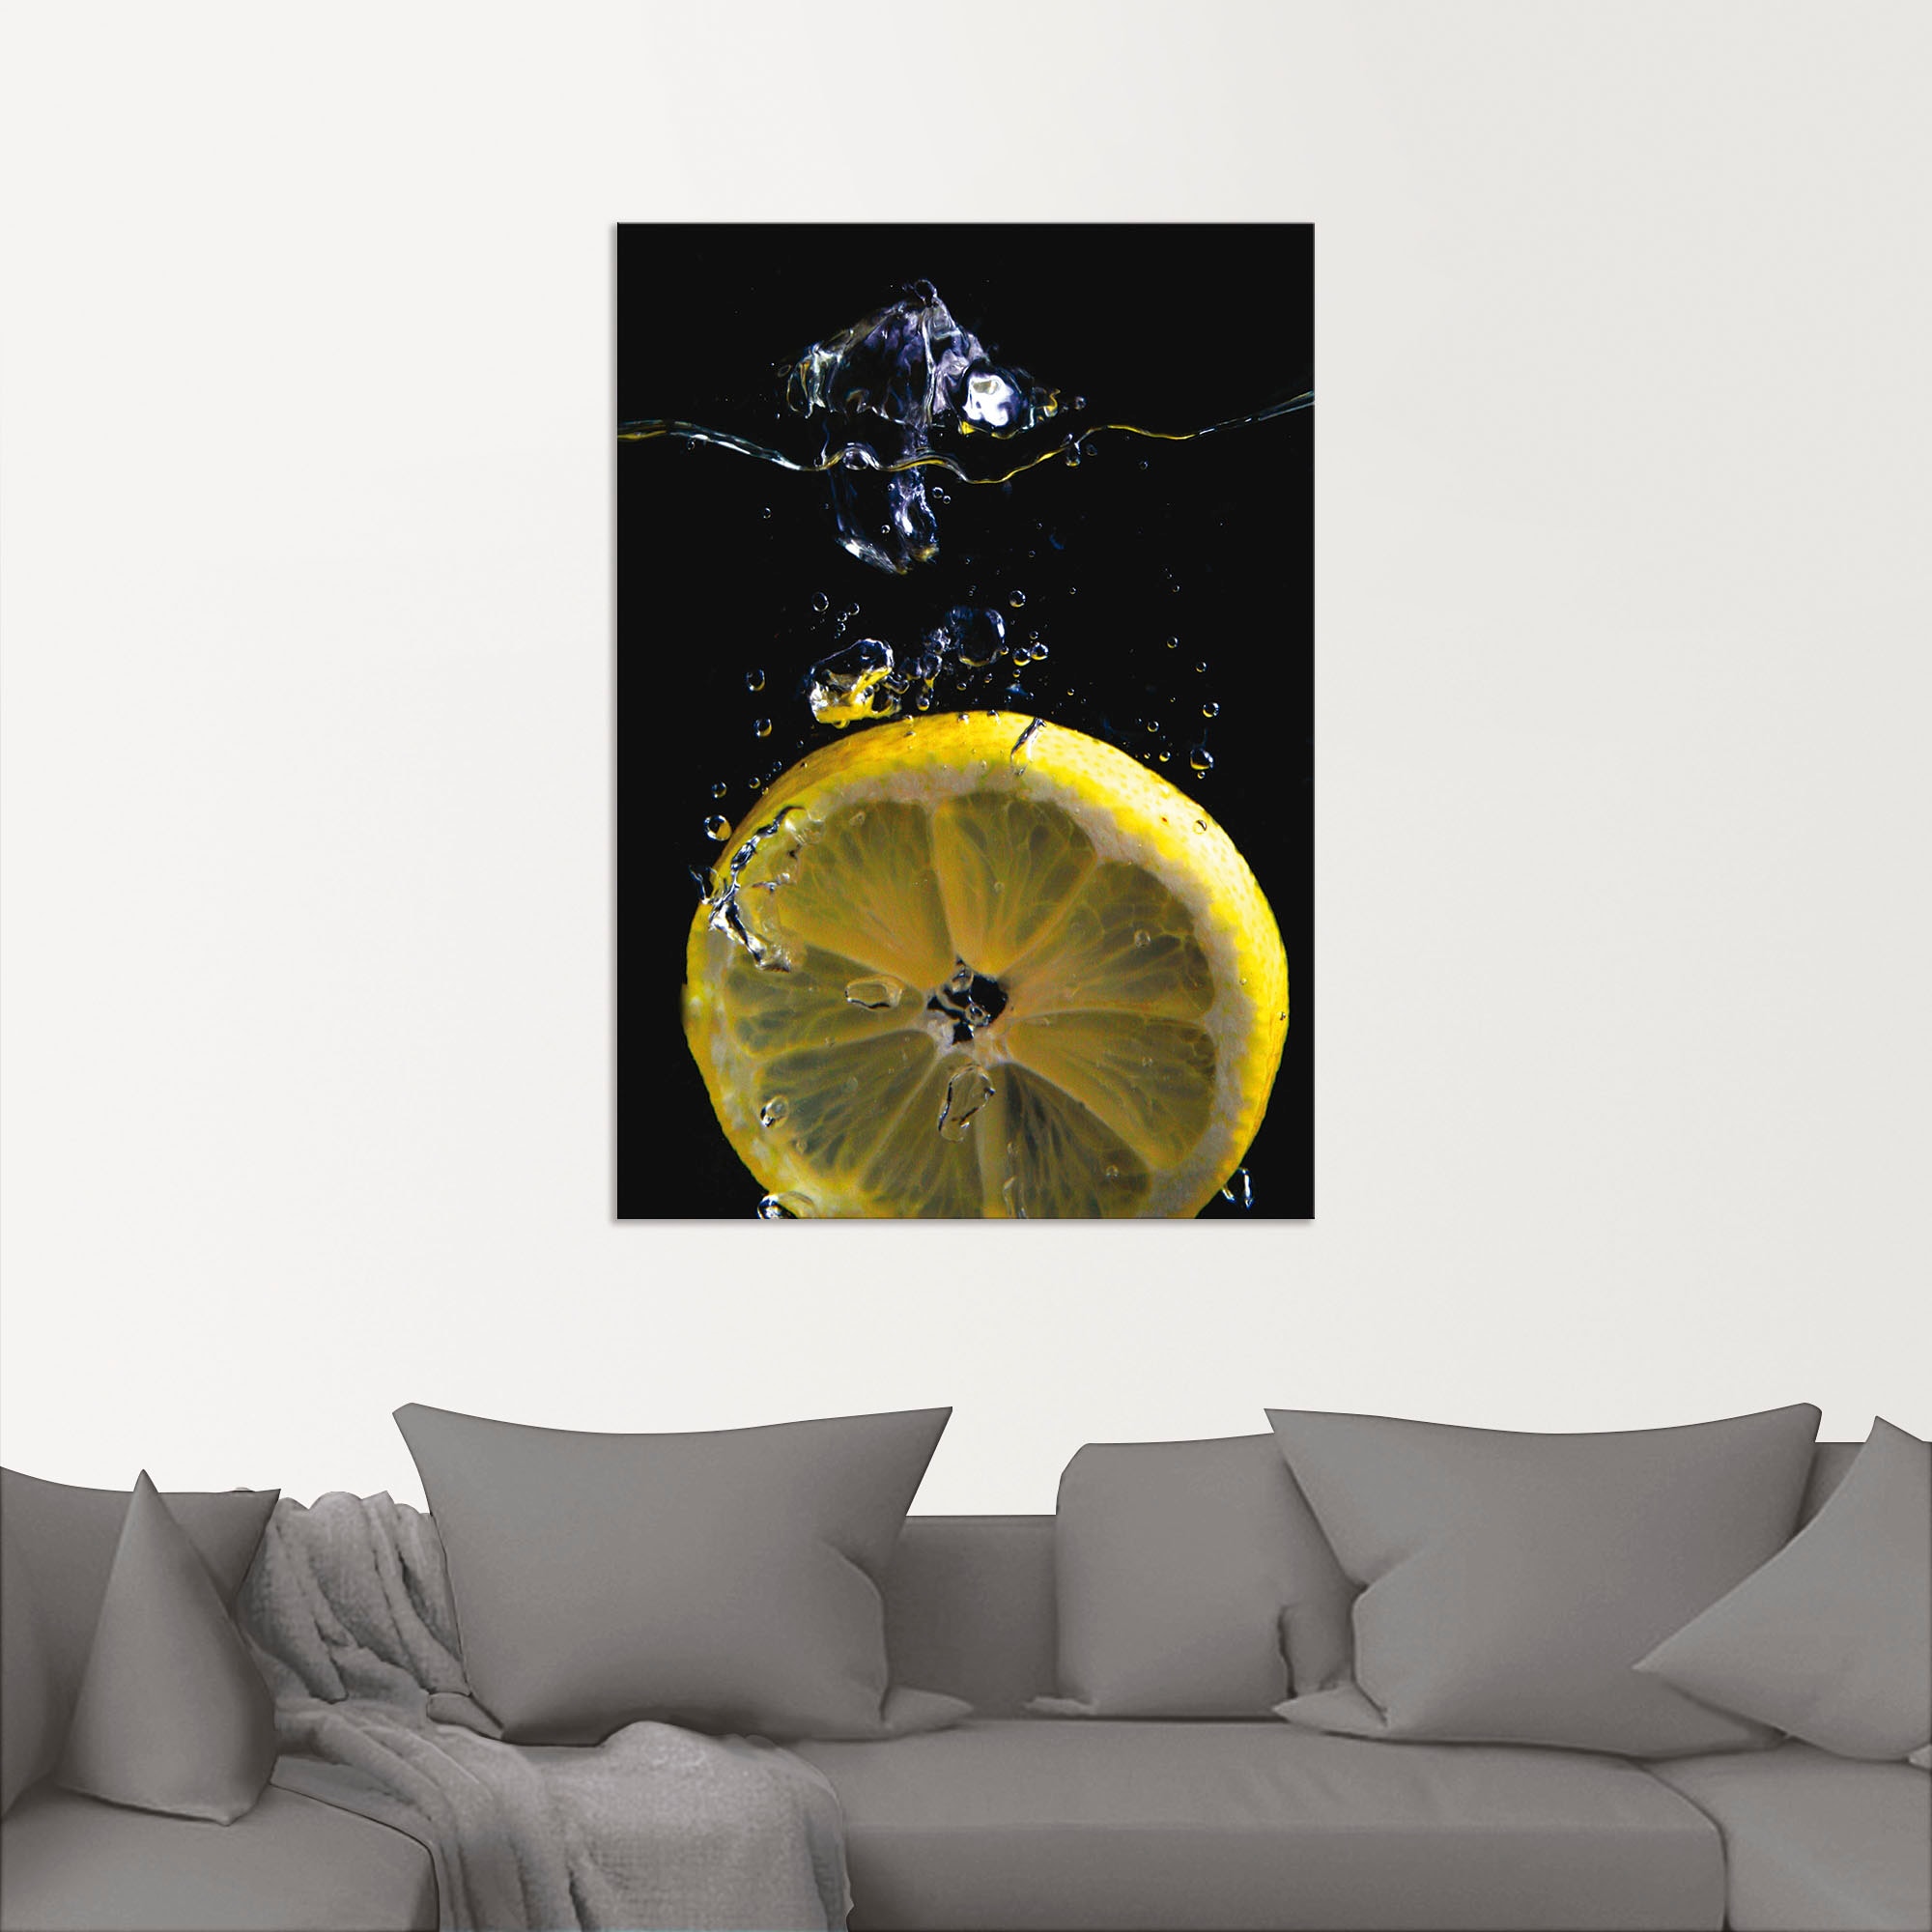 Artland Wandbild »Zitrone«, Lebensmittel, (1 St.), als Alubild, Outdoorbild, Leinwandbild, Poster in verschied. Größen